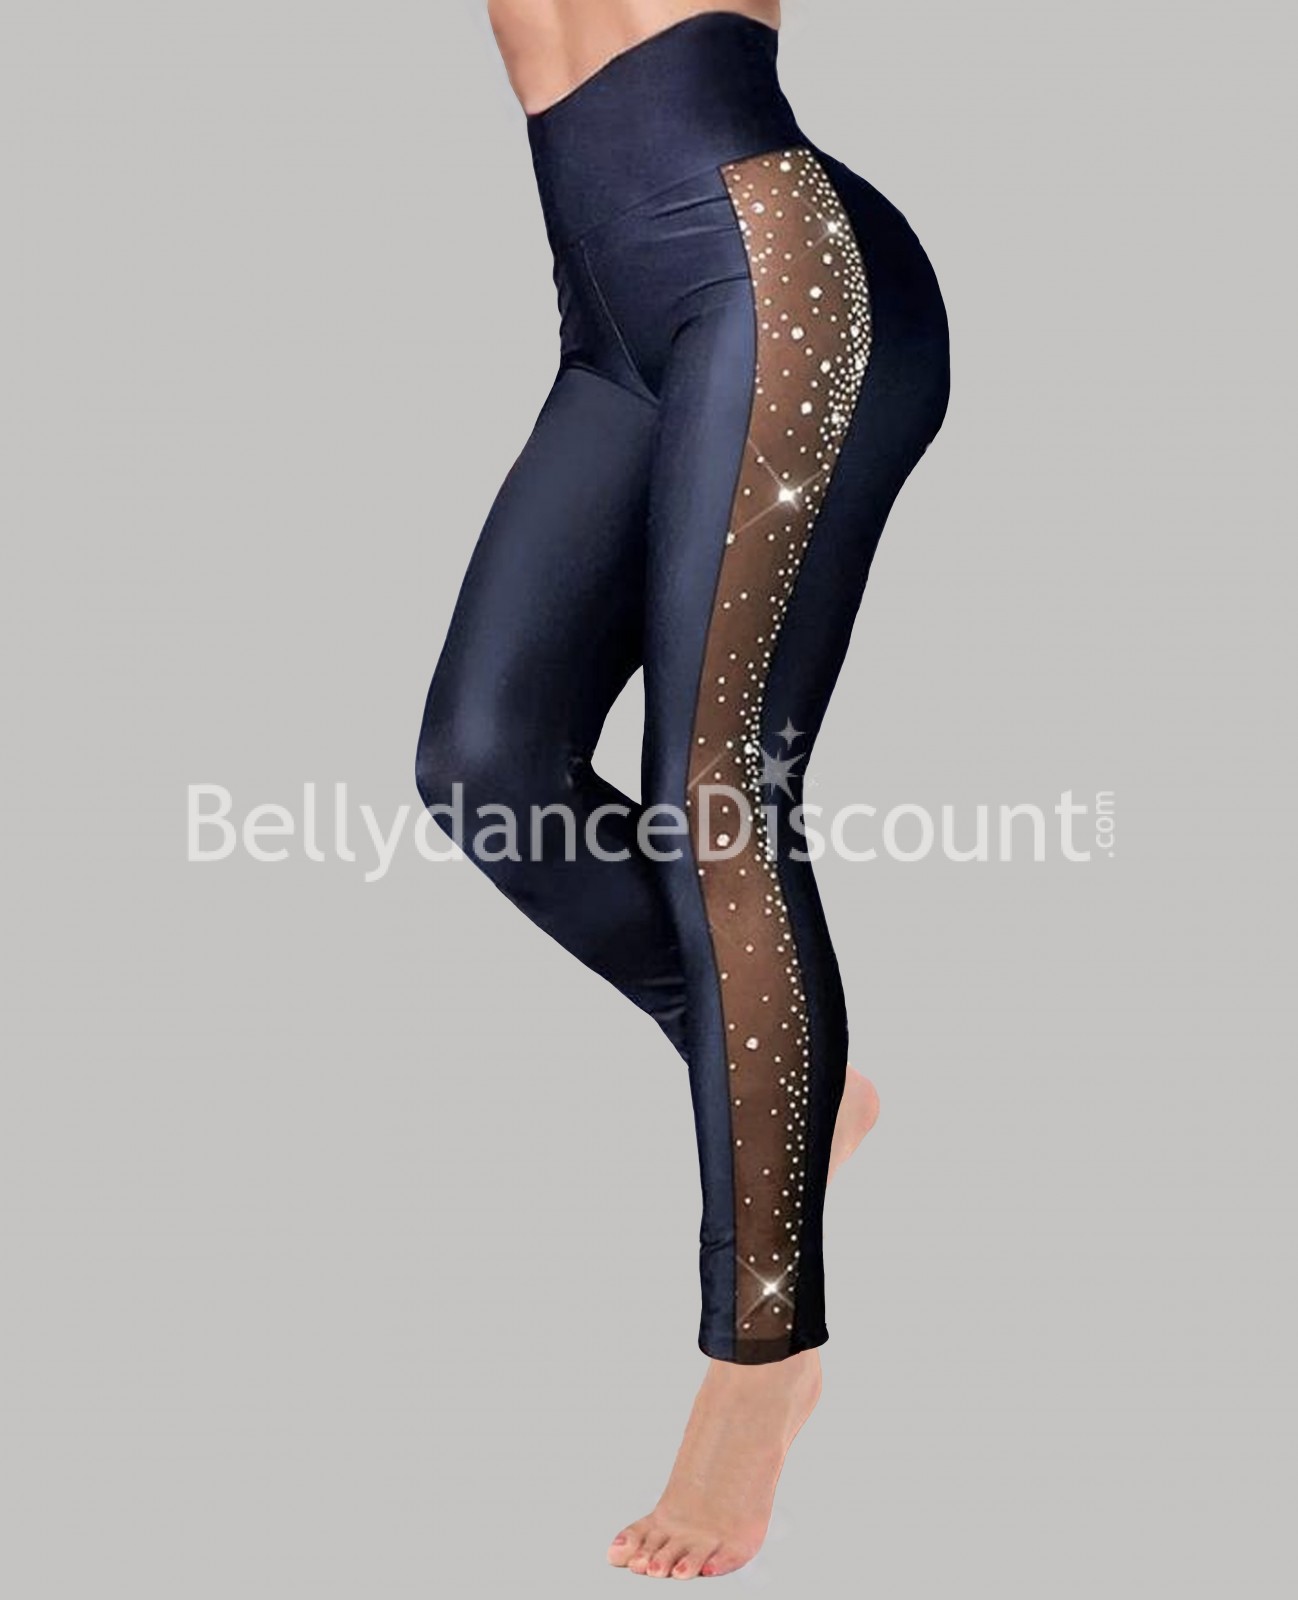 Black dance leggings with rhinestones - 32,90 €